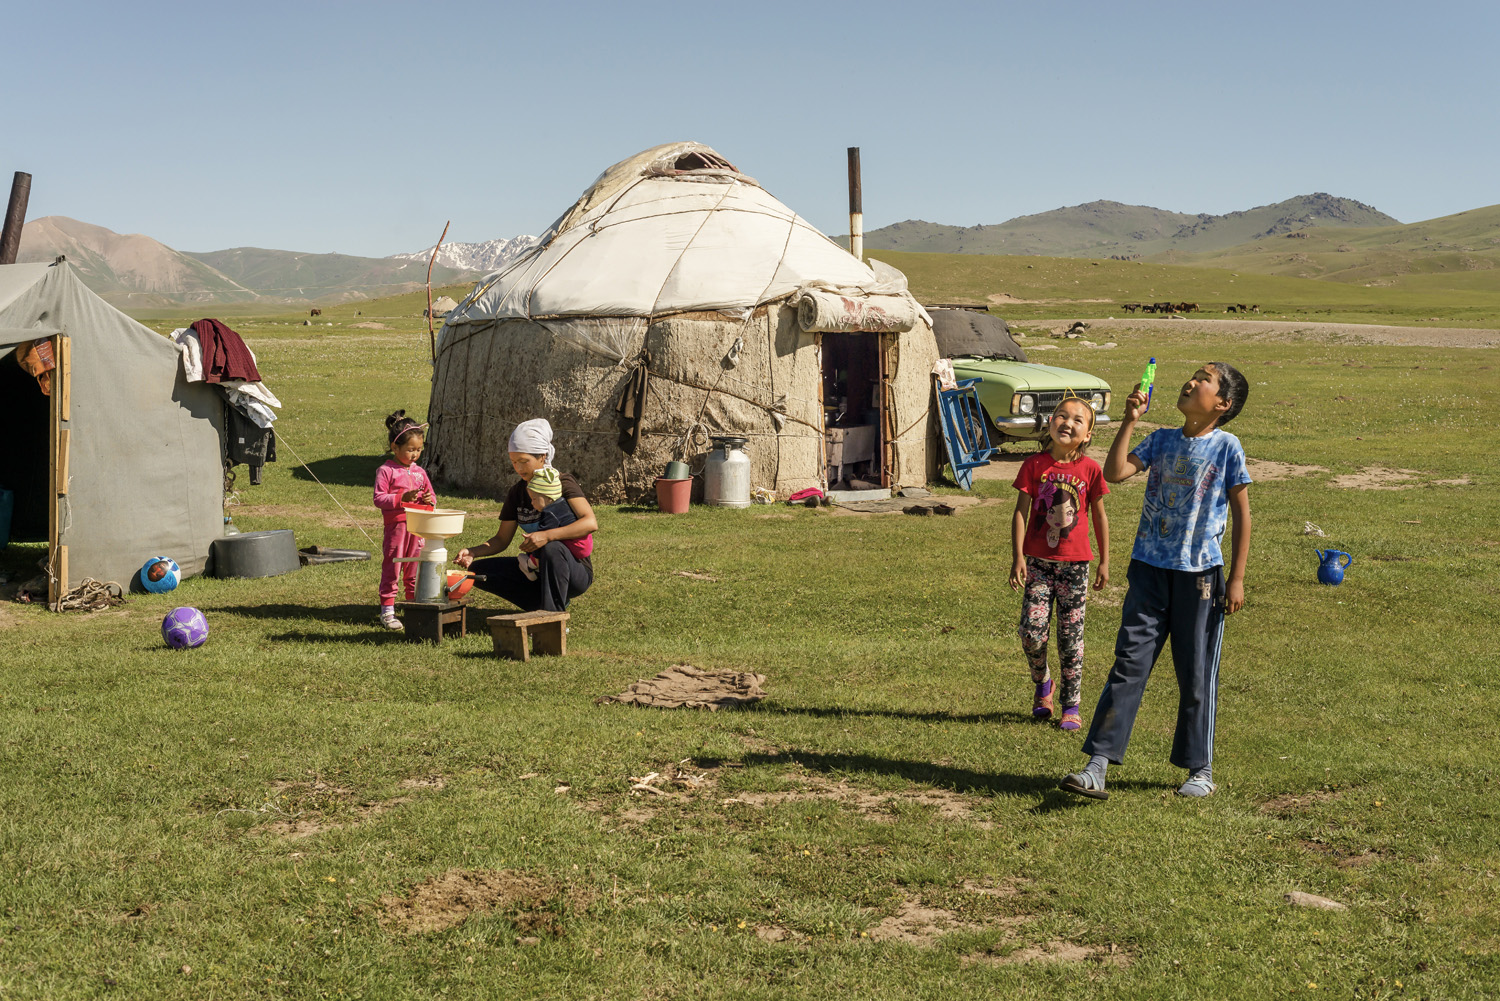 kyrgyzstan-nomads-lake-song-kul-jo-kearney-video-photography-soviet-yurt-family-camping-children-playing.jpg